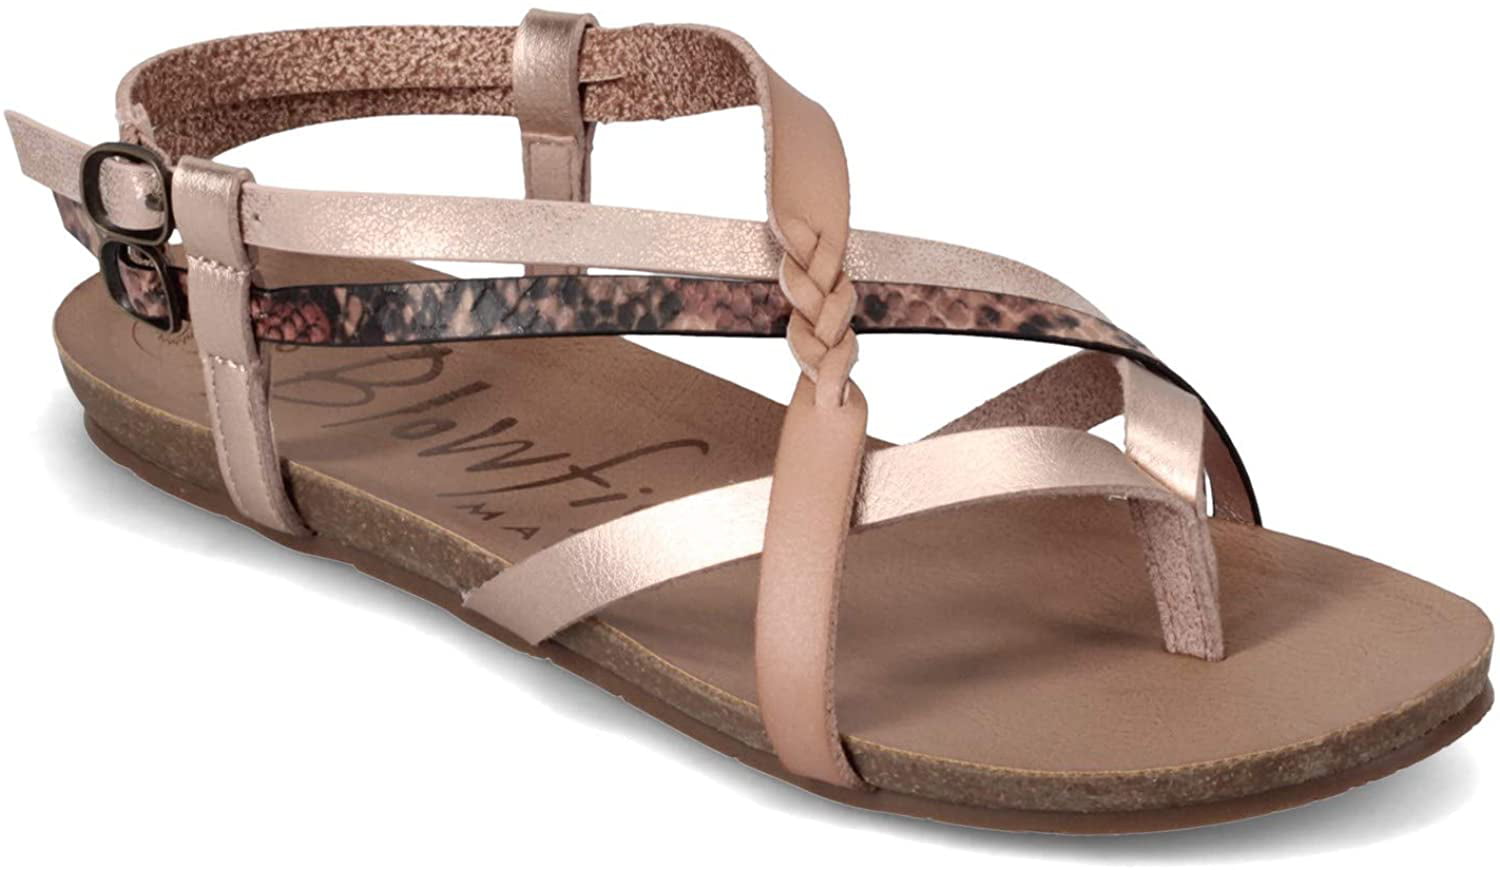 Blowfish Malibu Women's Summer Strappy Sandals Rose Gold Size 8 8.5 9.5 New 